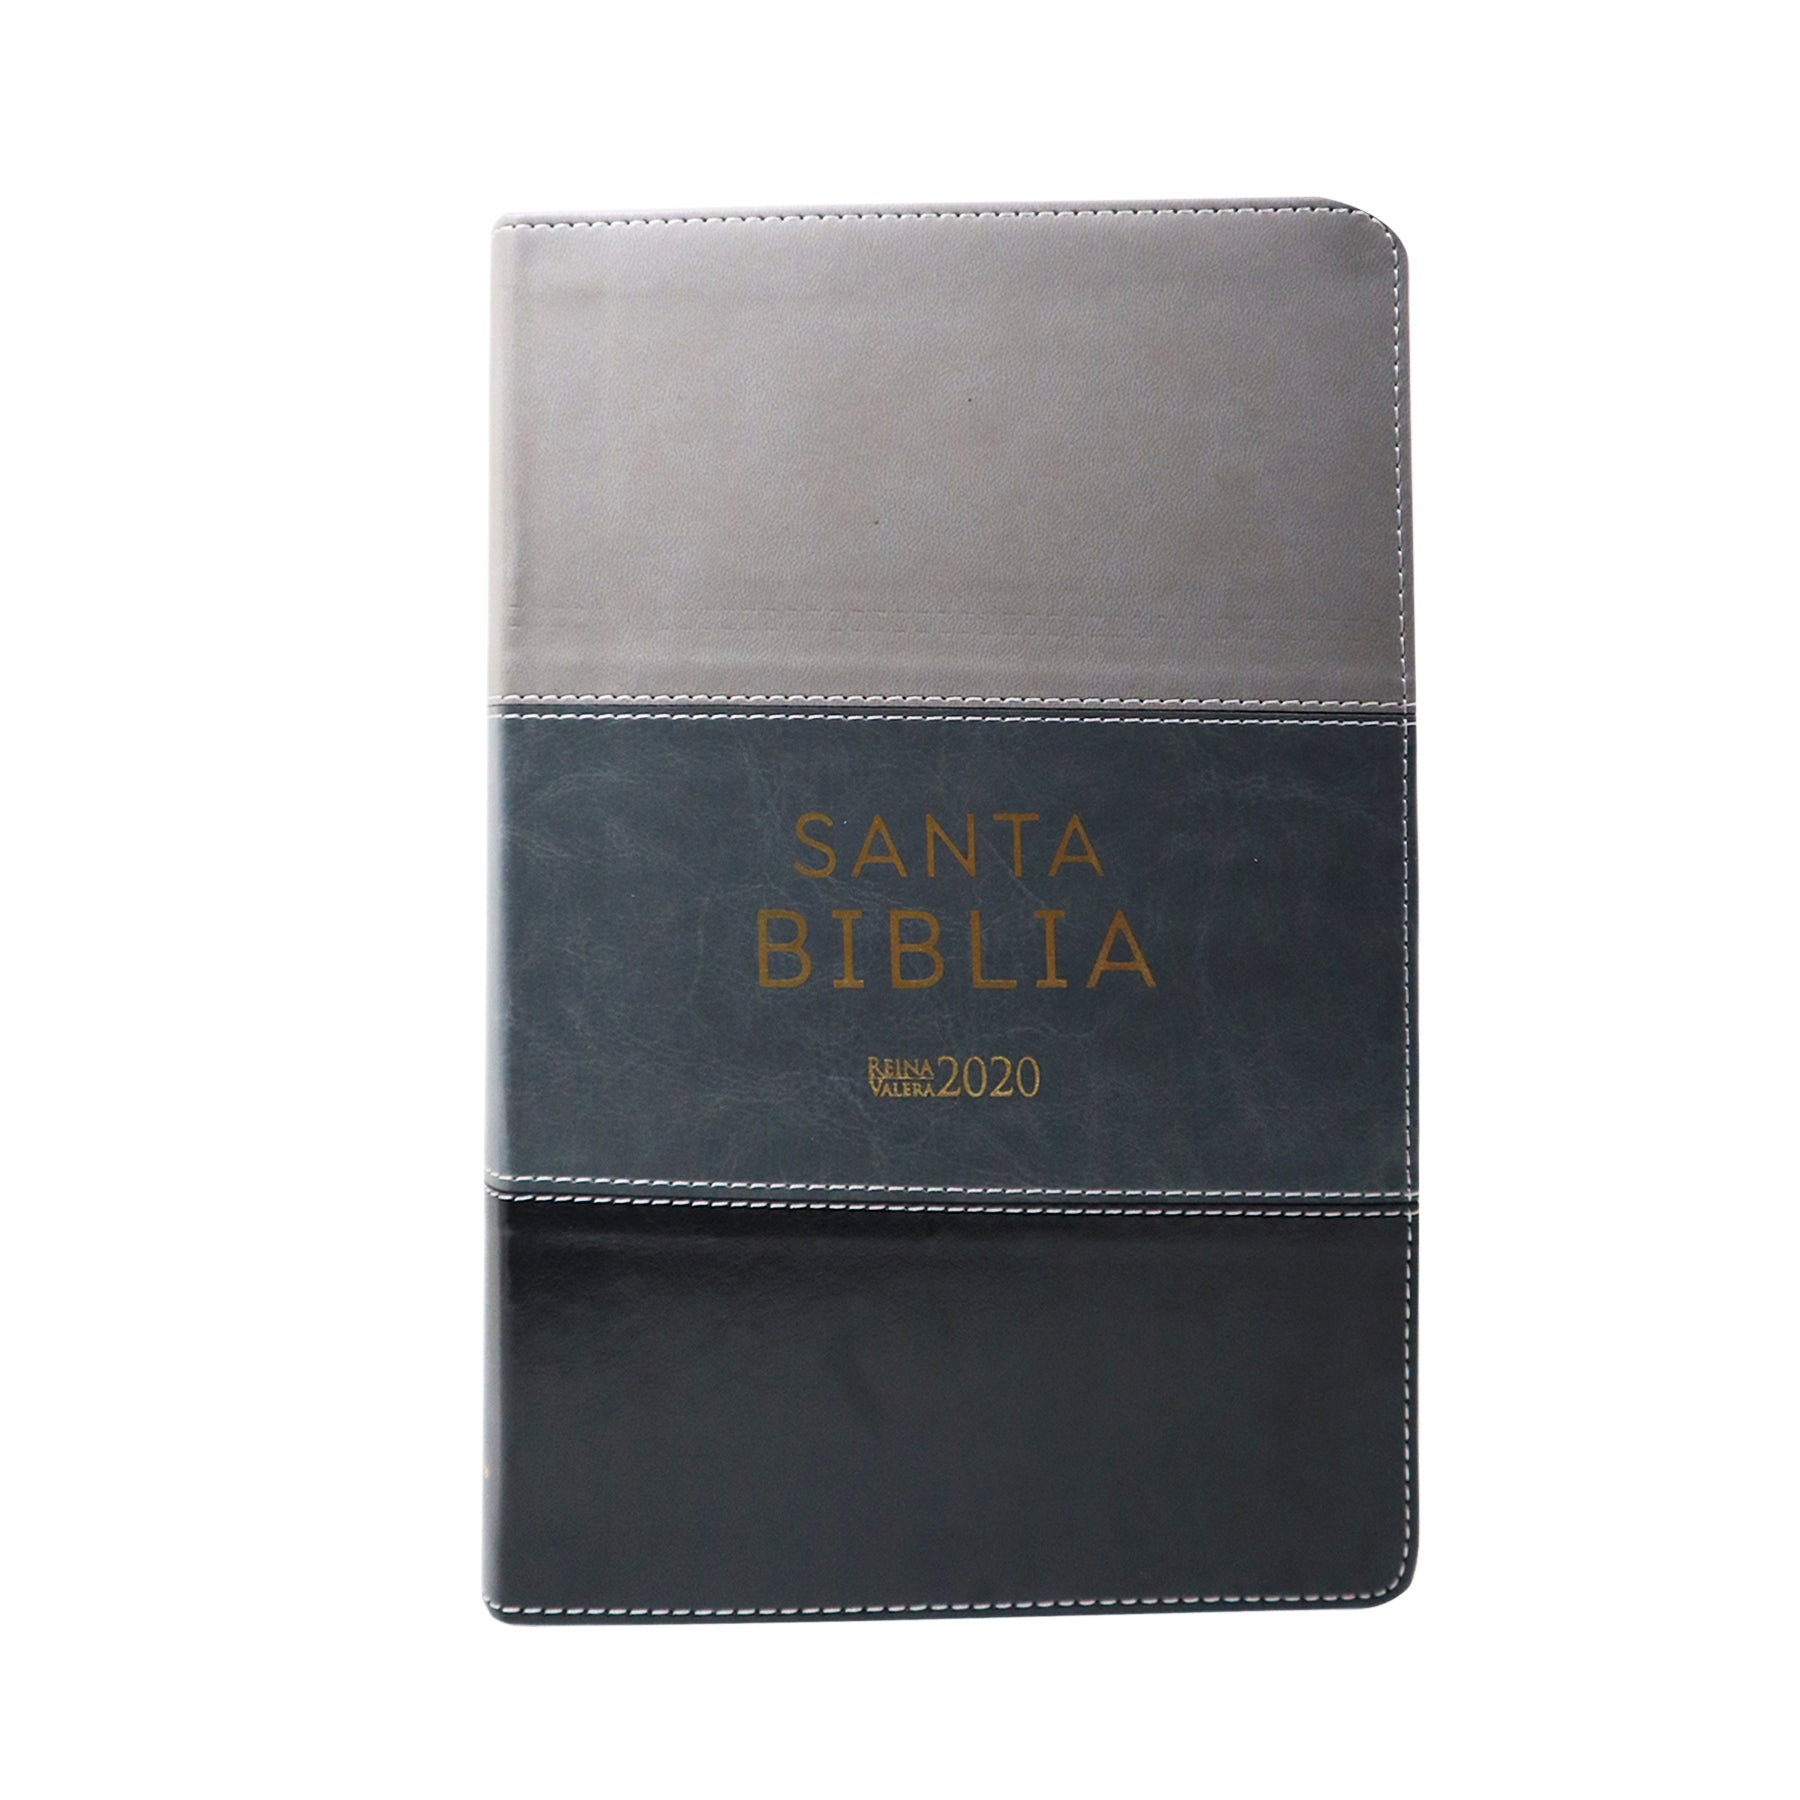 SANTA BIBLIA REINA VALERA 2020       (4 colores)